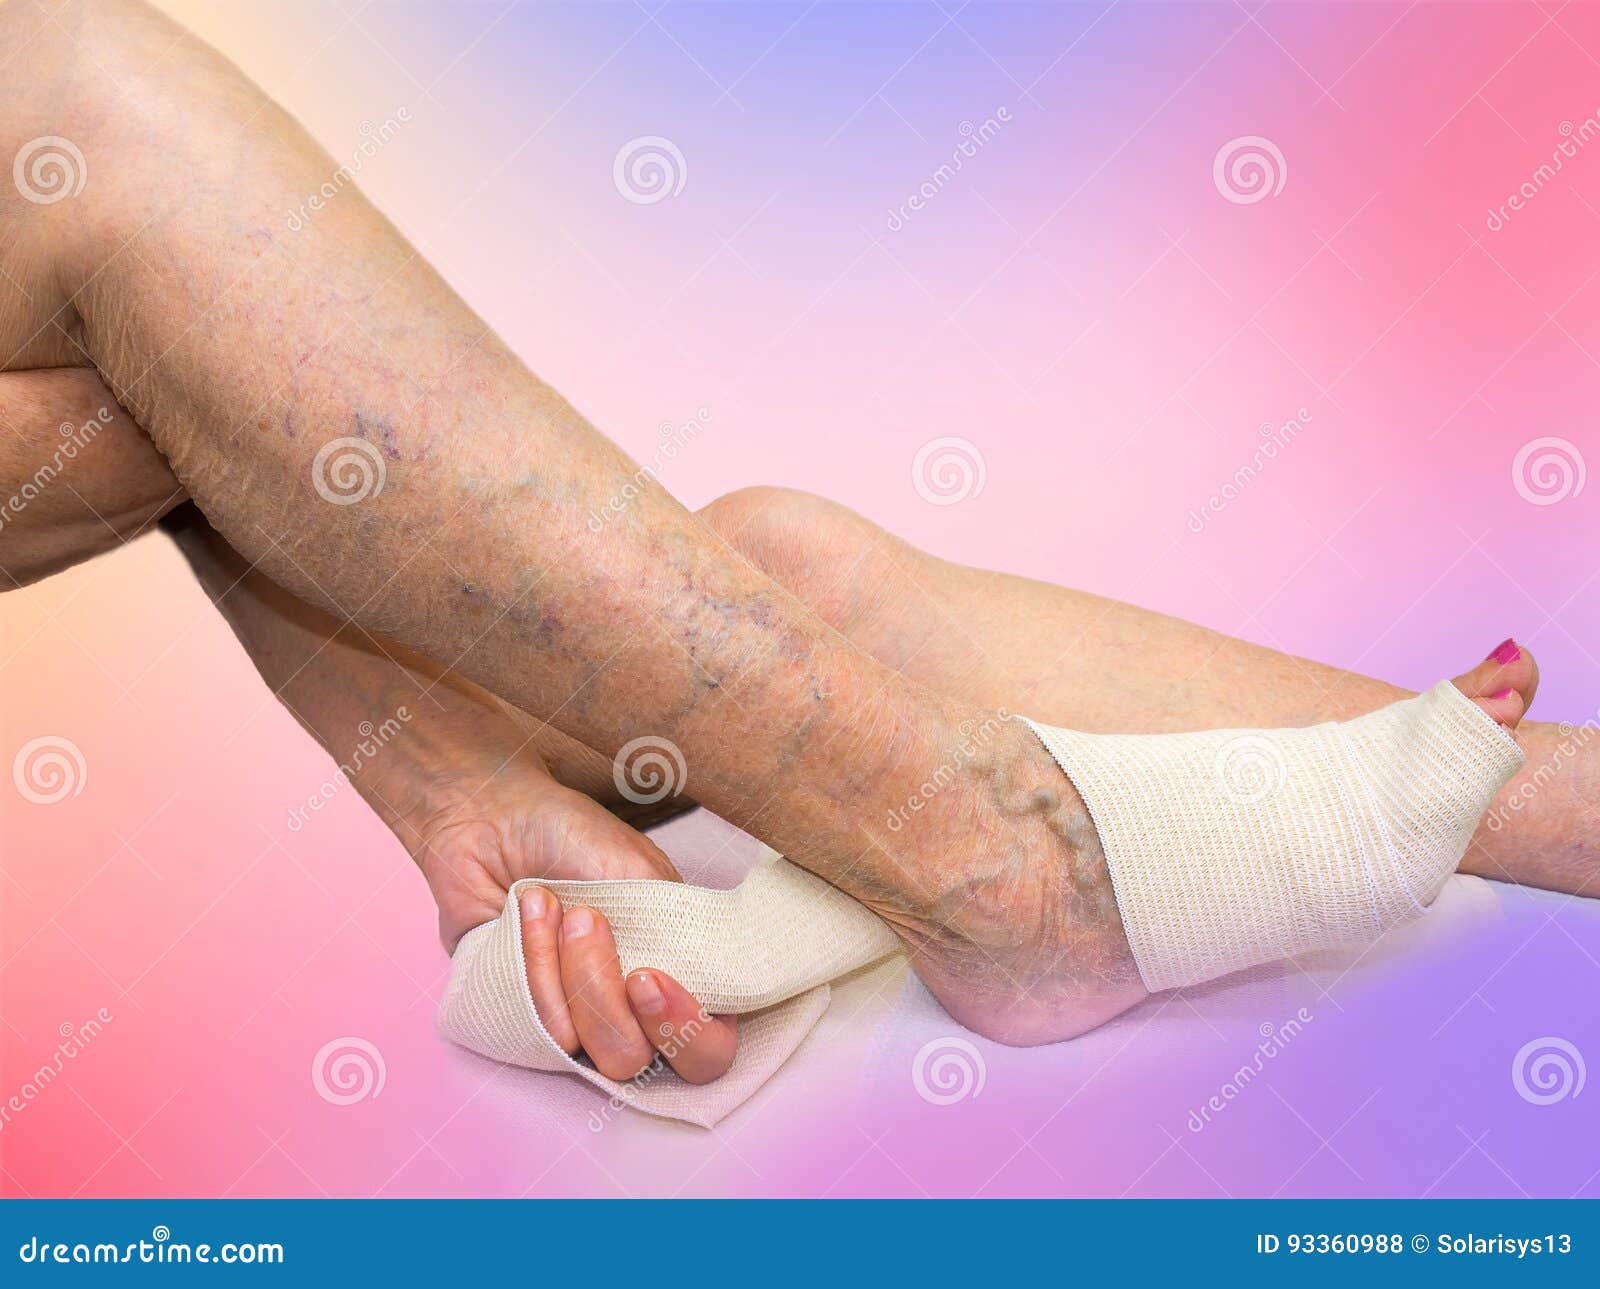 Elastic vene varicoase bandaj ca bandajarea un picior cu un bandaj elastic cu varice